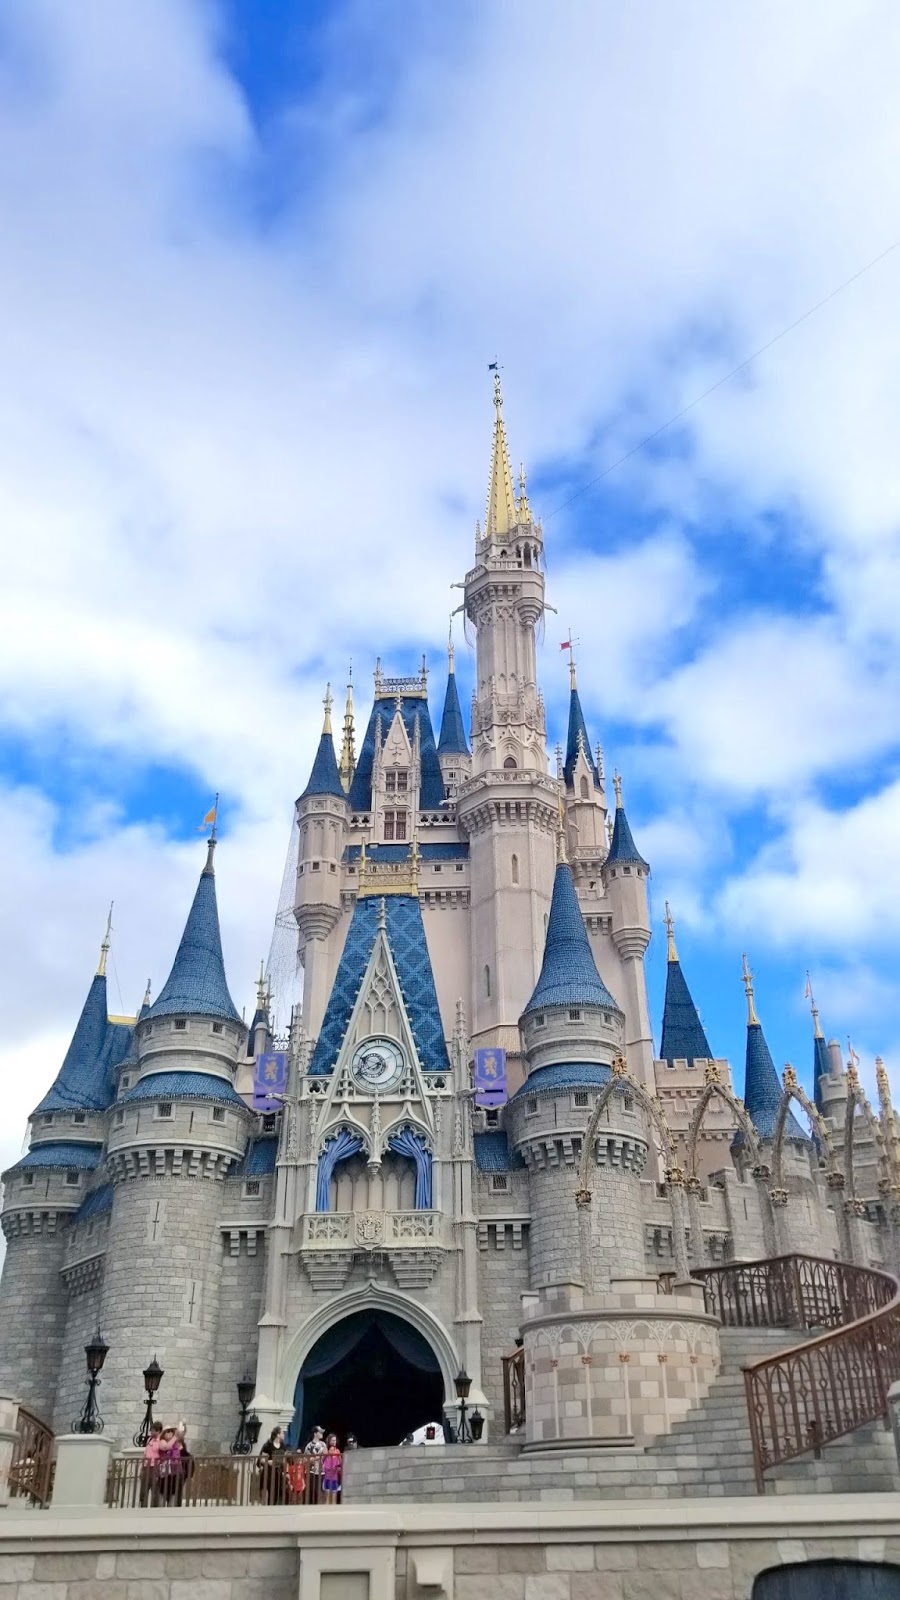 Disney World vs. Universal Studios Orlando: Which parks should you visit?